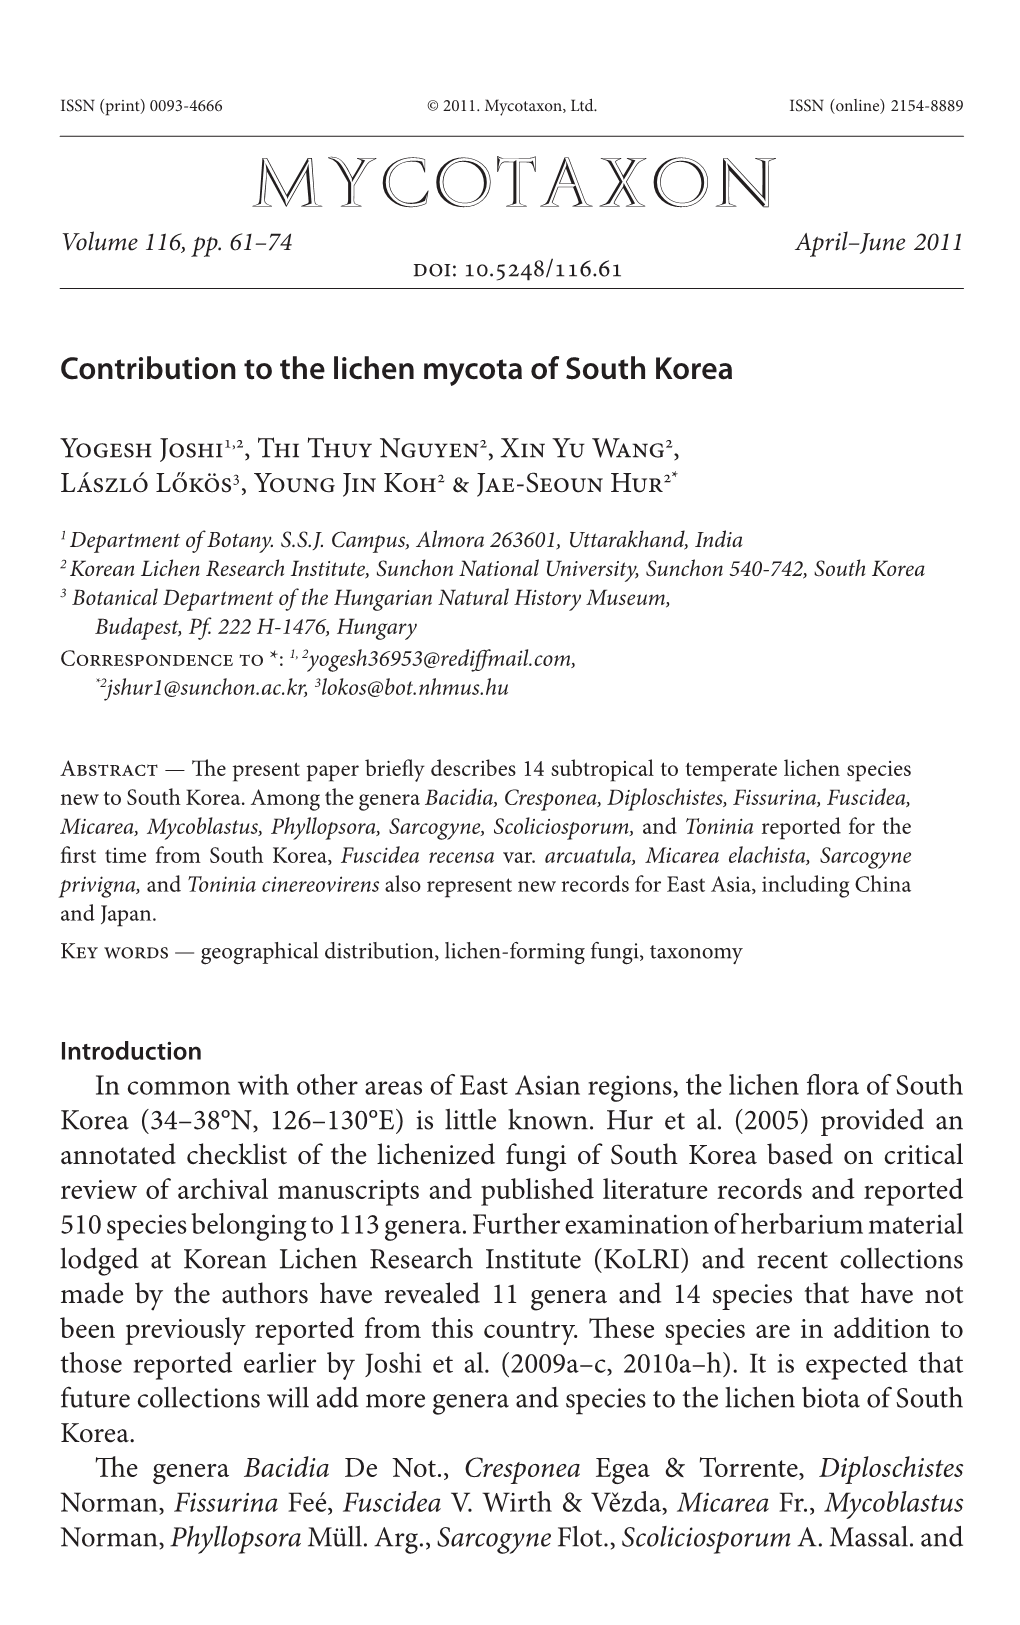 Contribution to the Lichen Mycota of South Korea